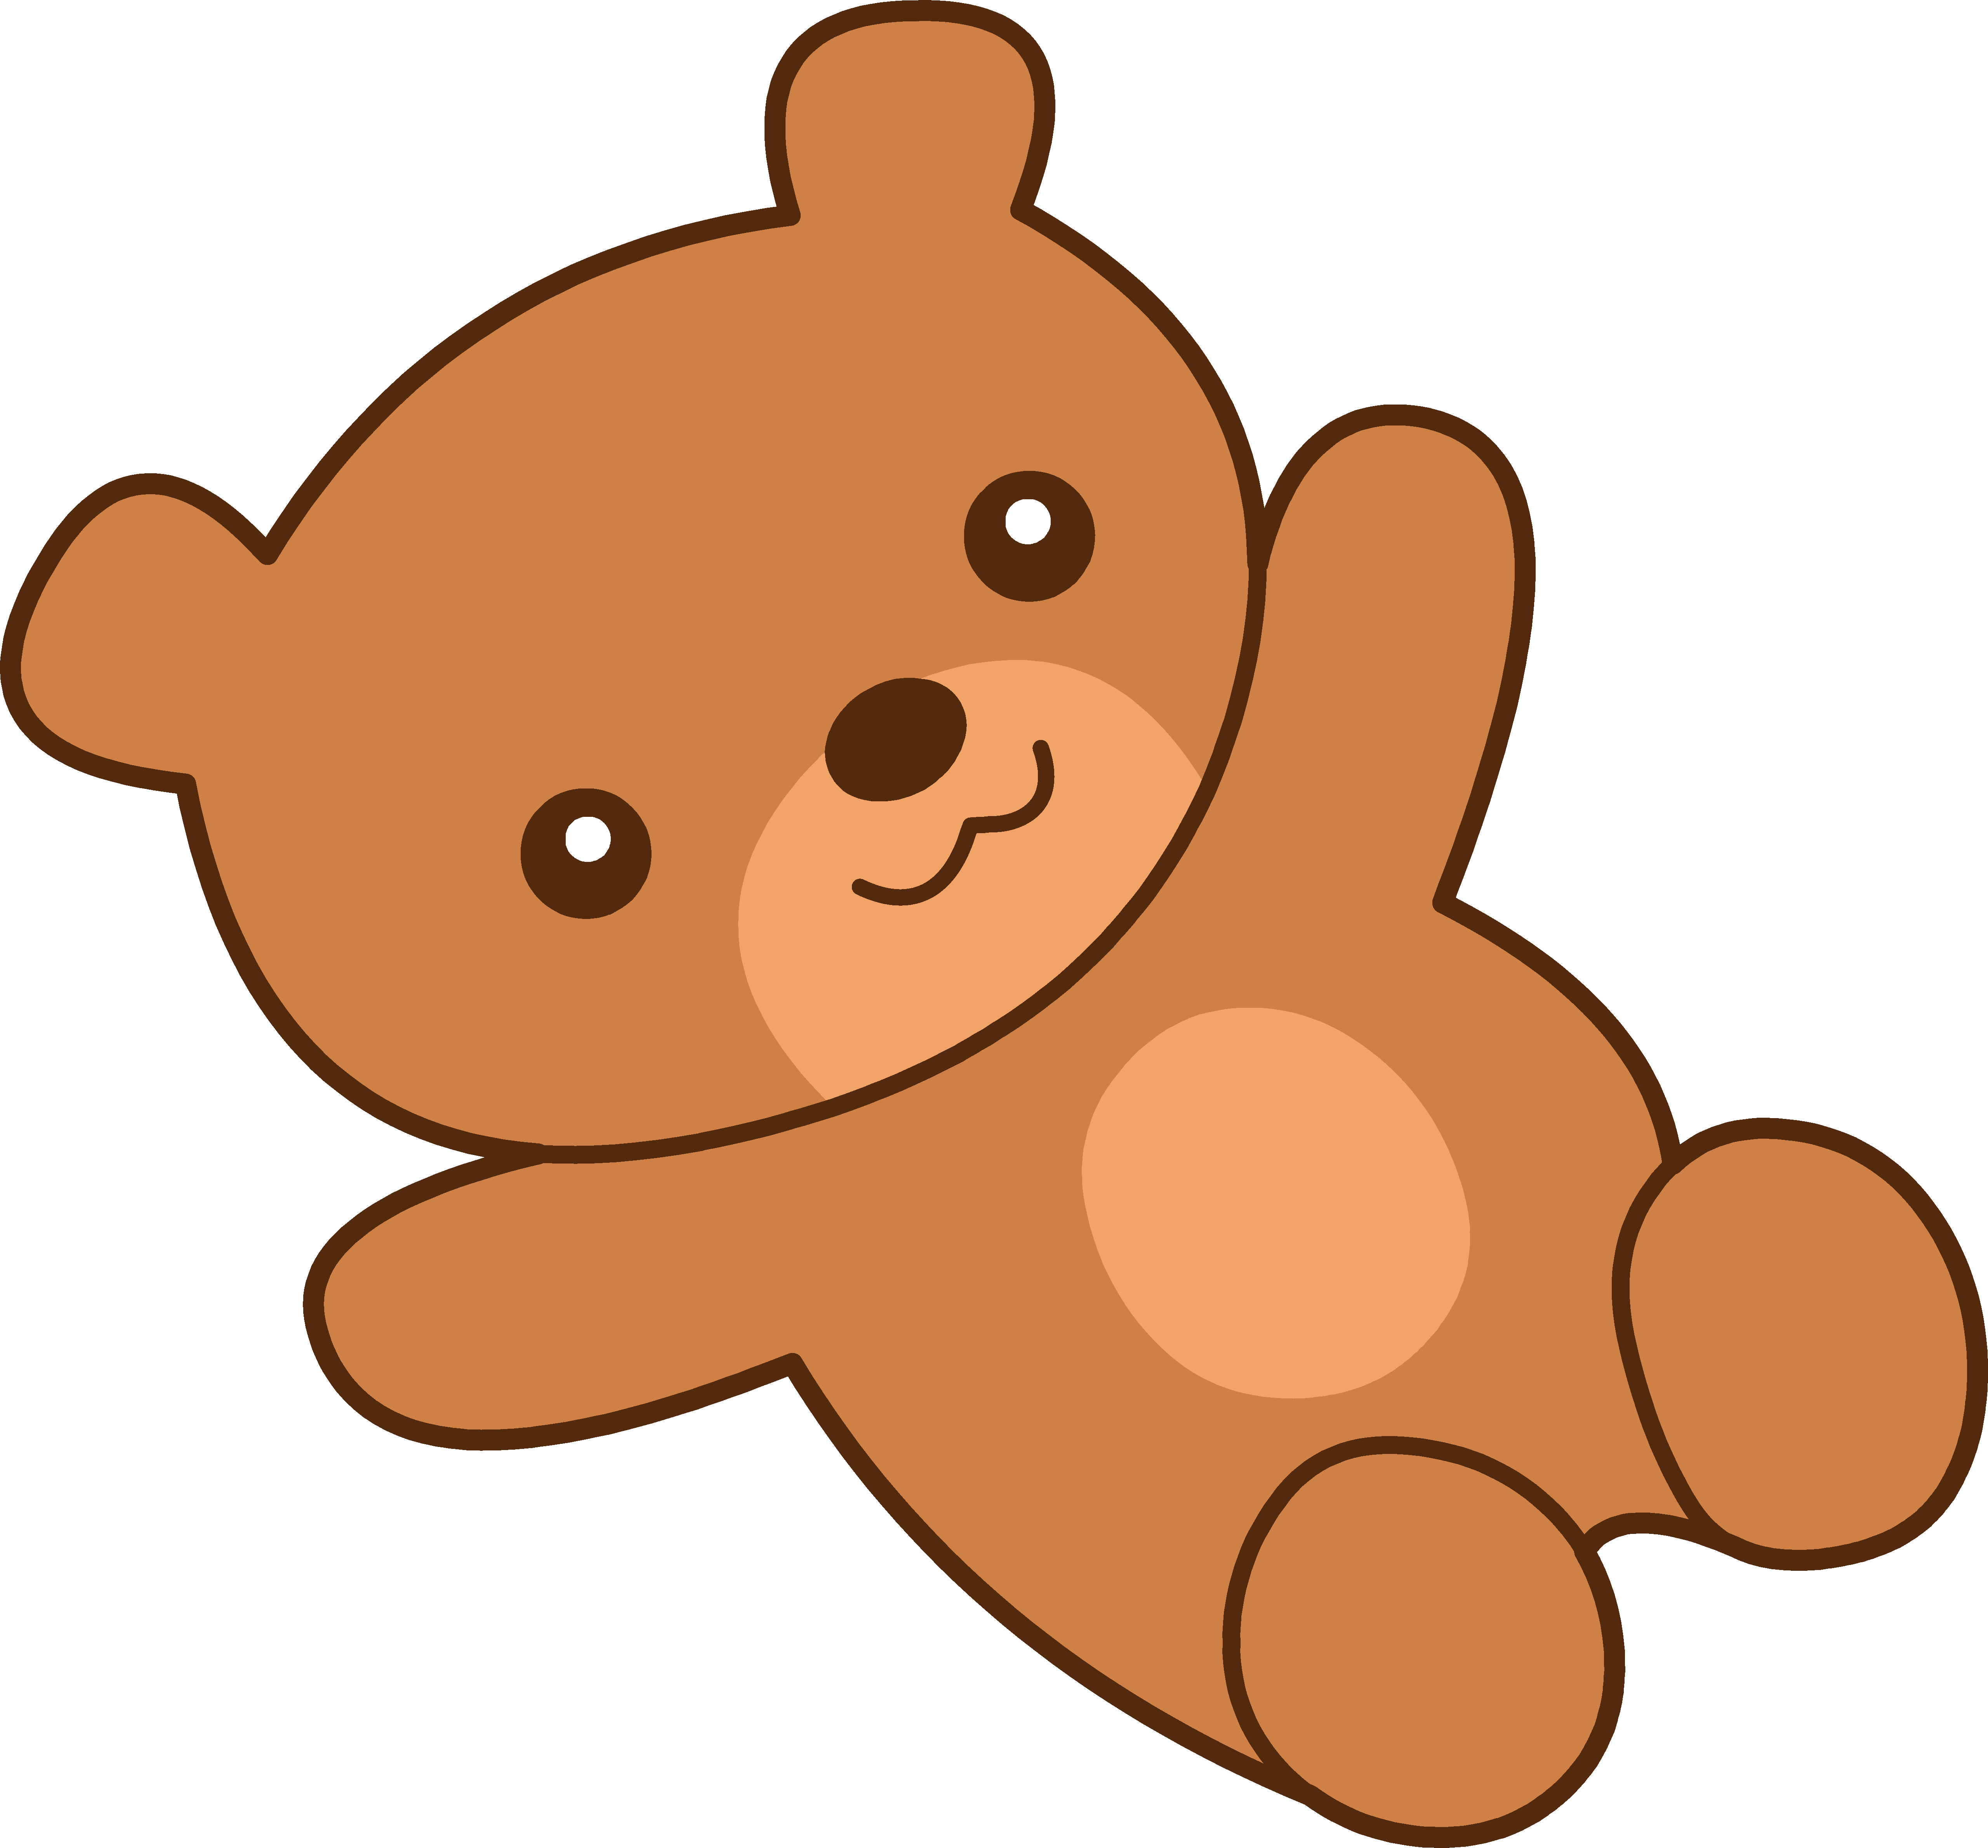 teddy bears clip art free download - photo #11